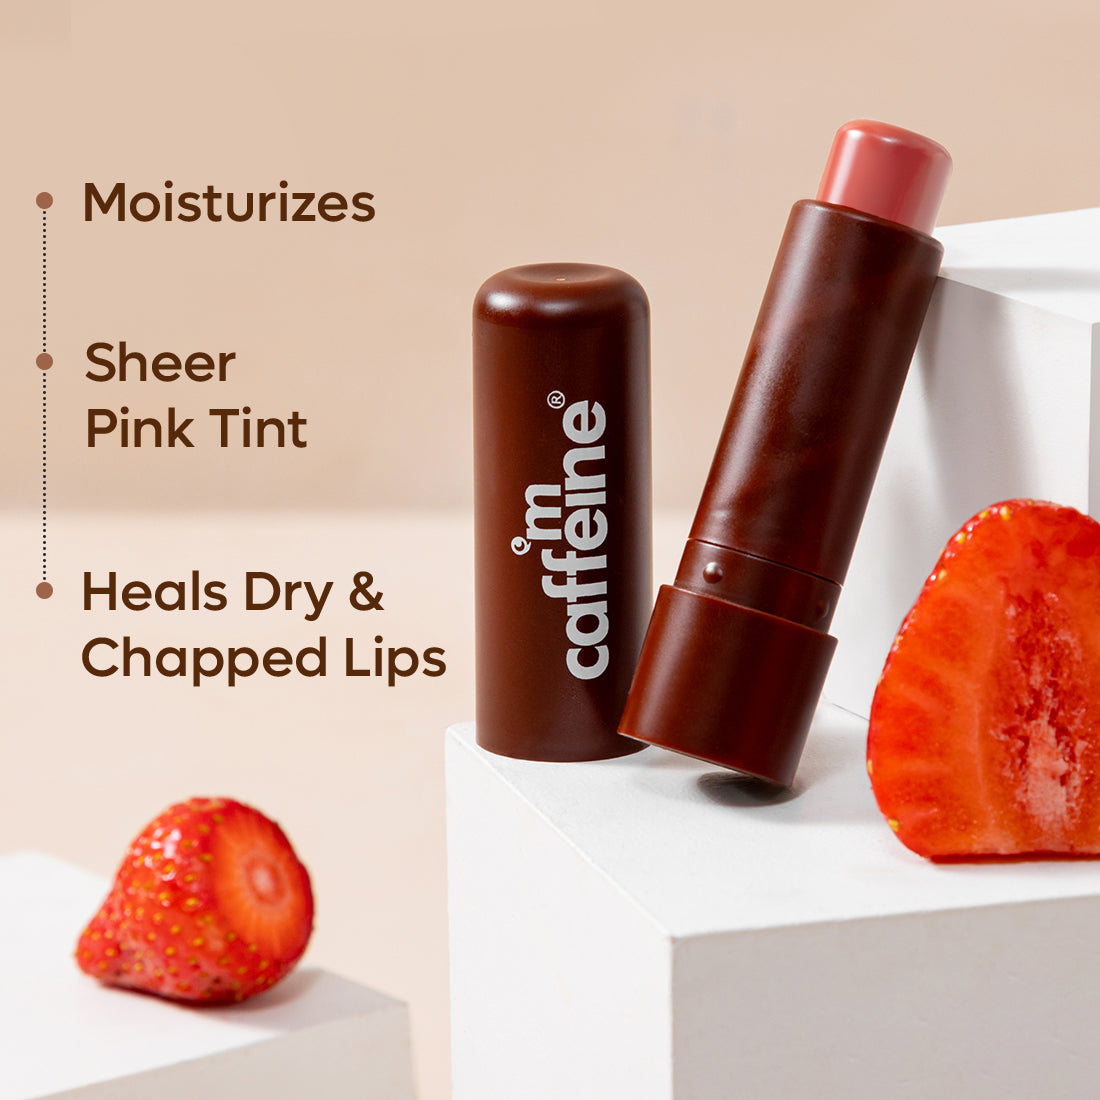 mCaffeine Choco Tinted Lip Balm with Berries